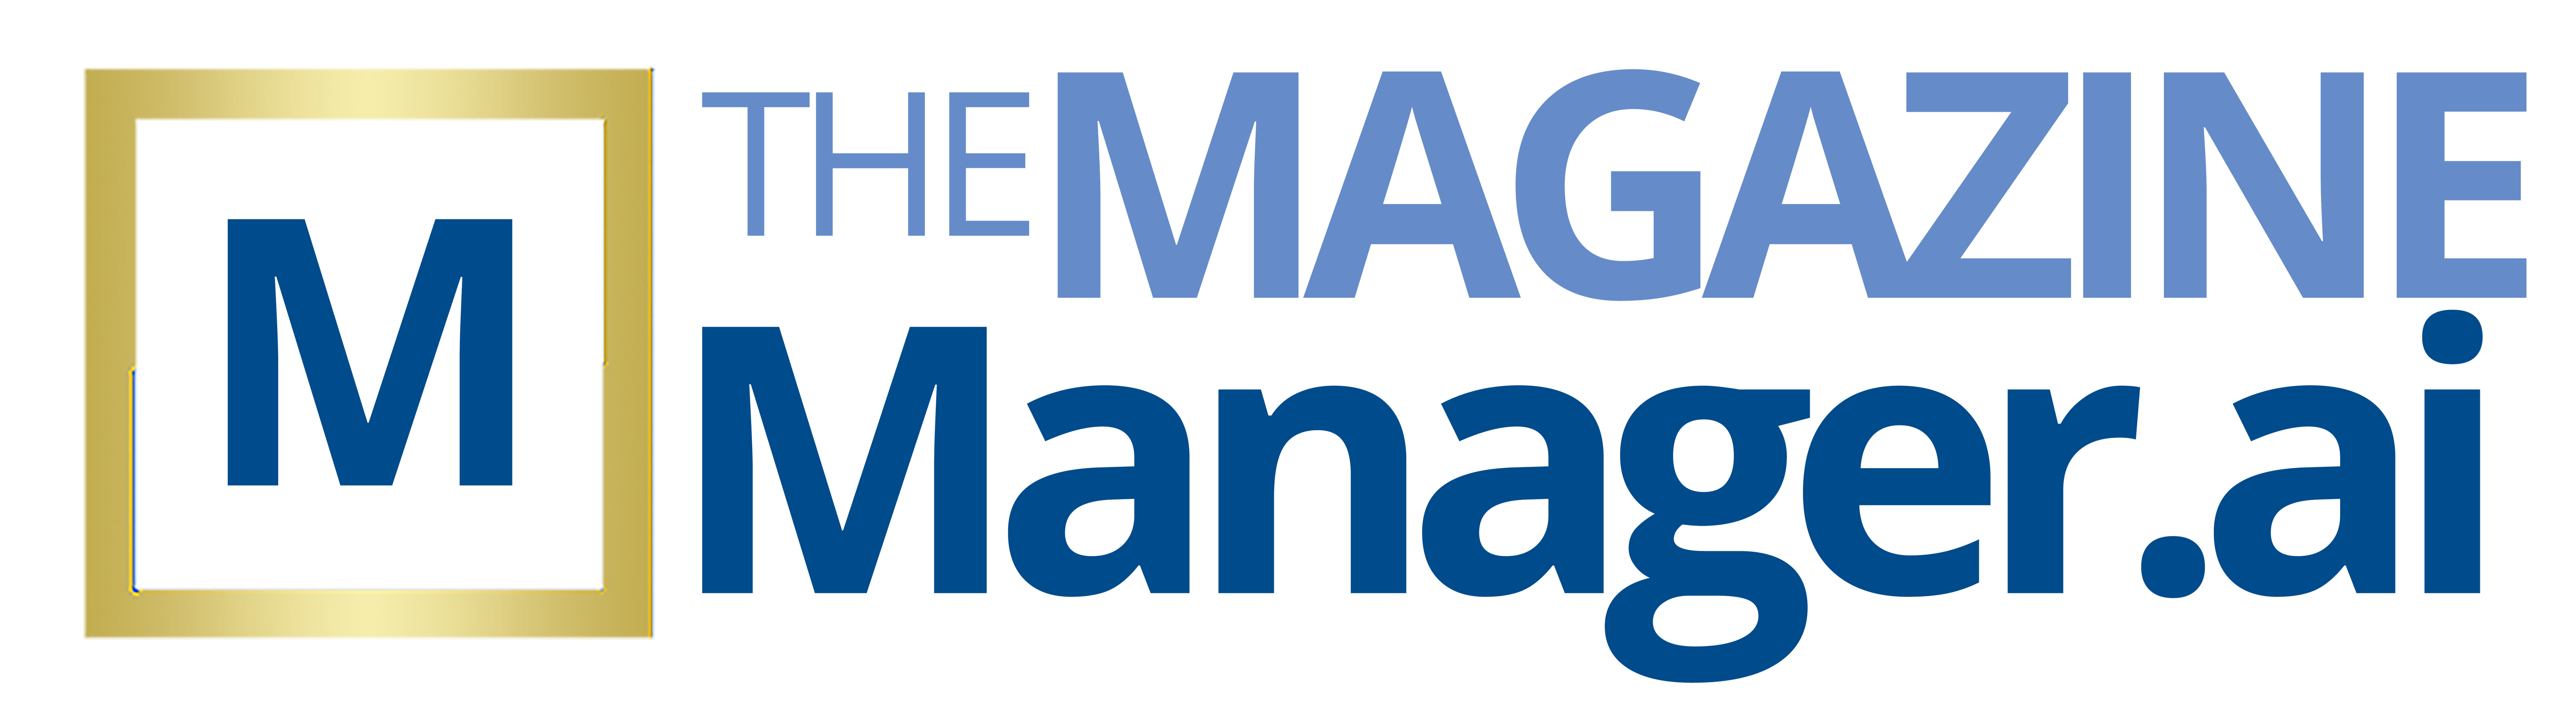 Magazine Manager Logo - AI_300dpi